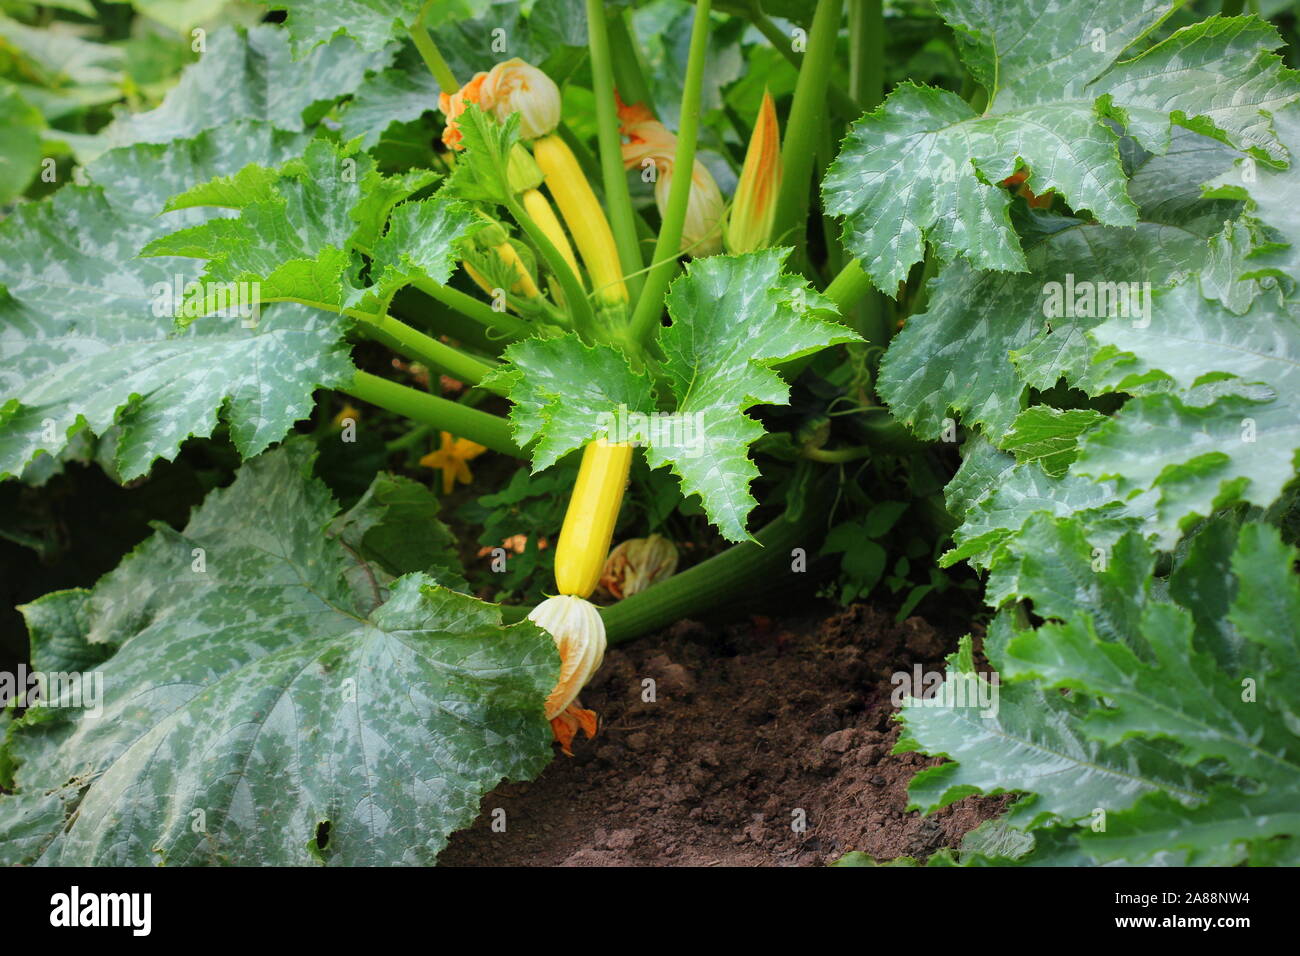 Zucchini plant. Zucchini flower. Green vegetable marrow growing on bush Stock Photo